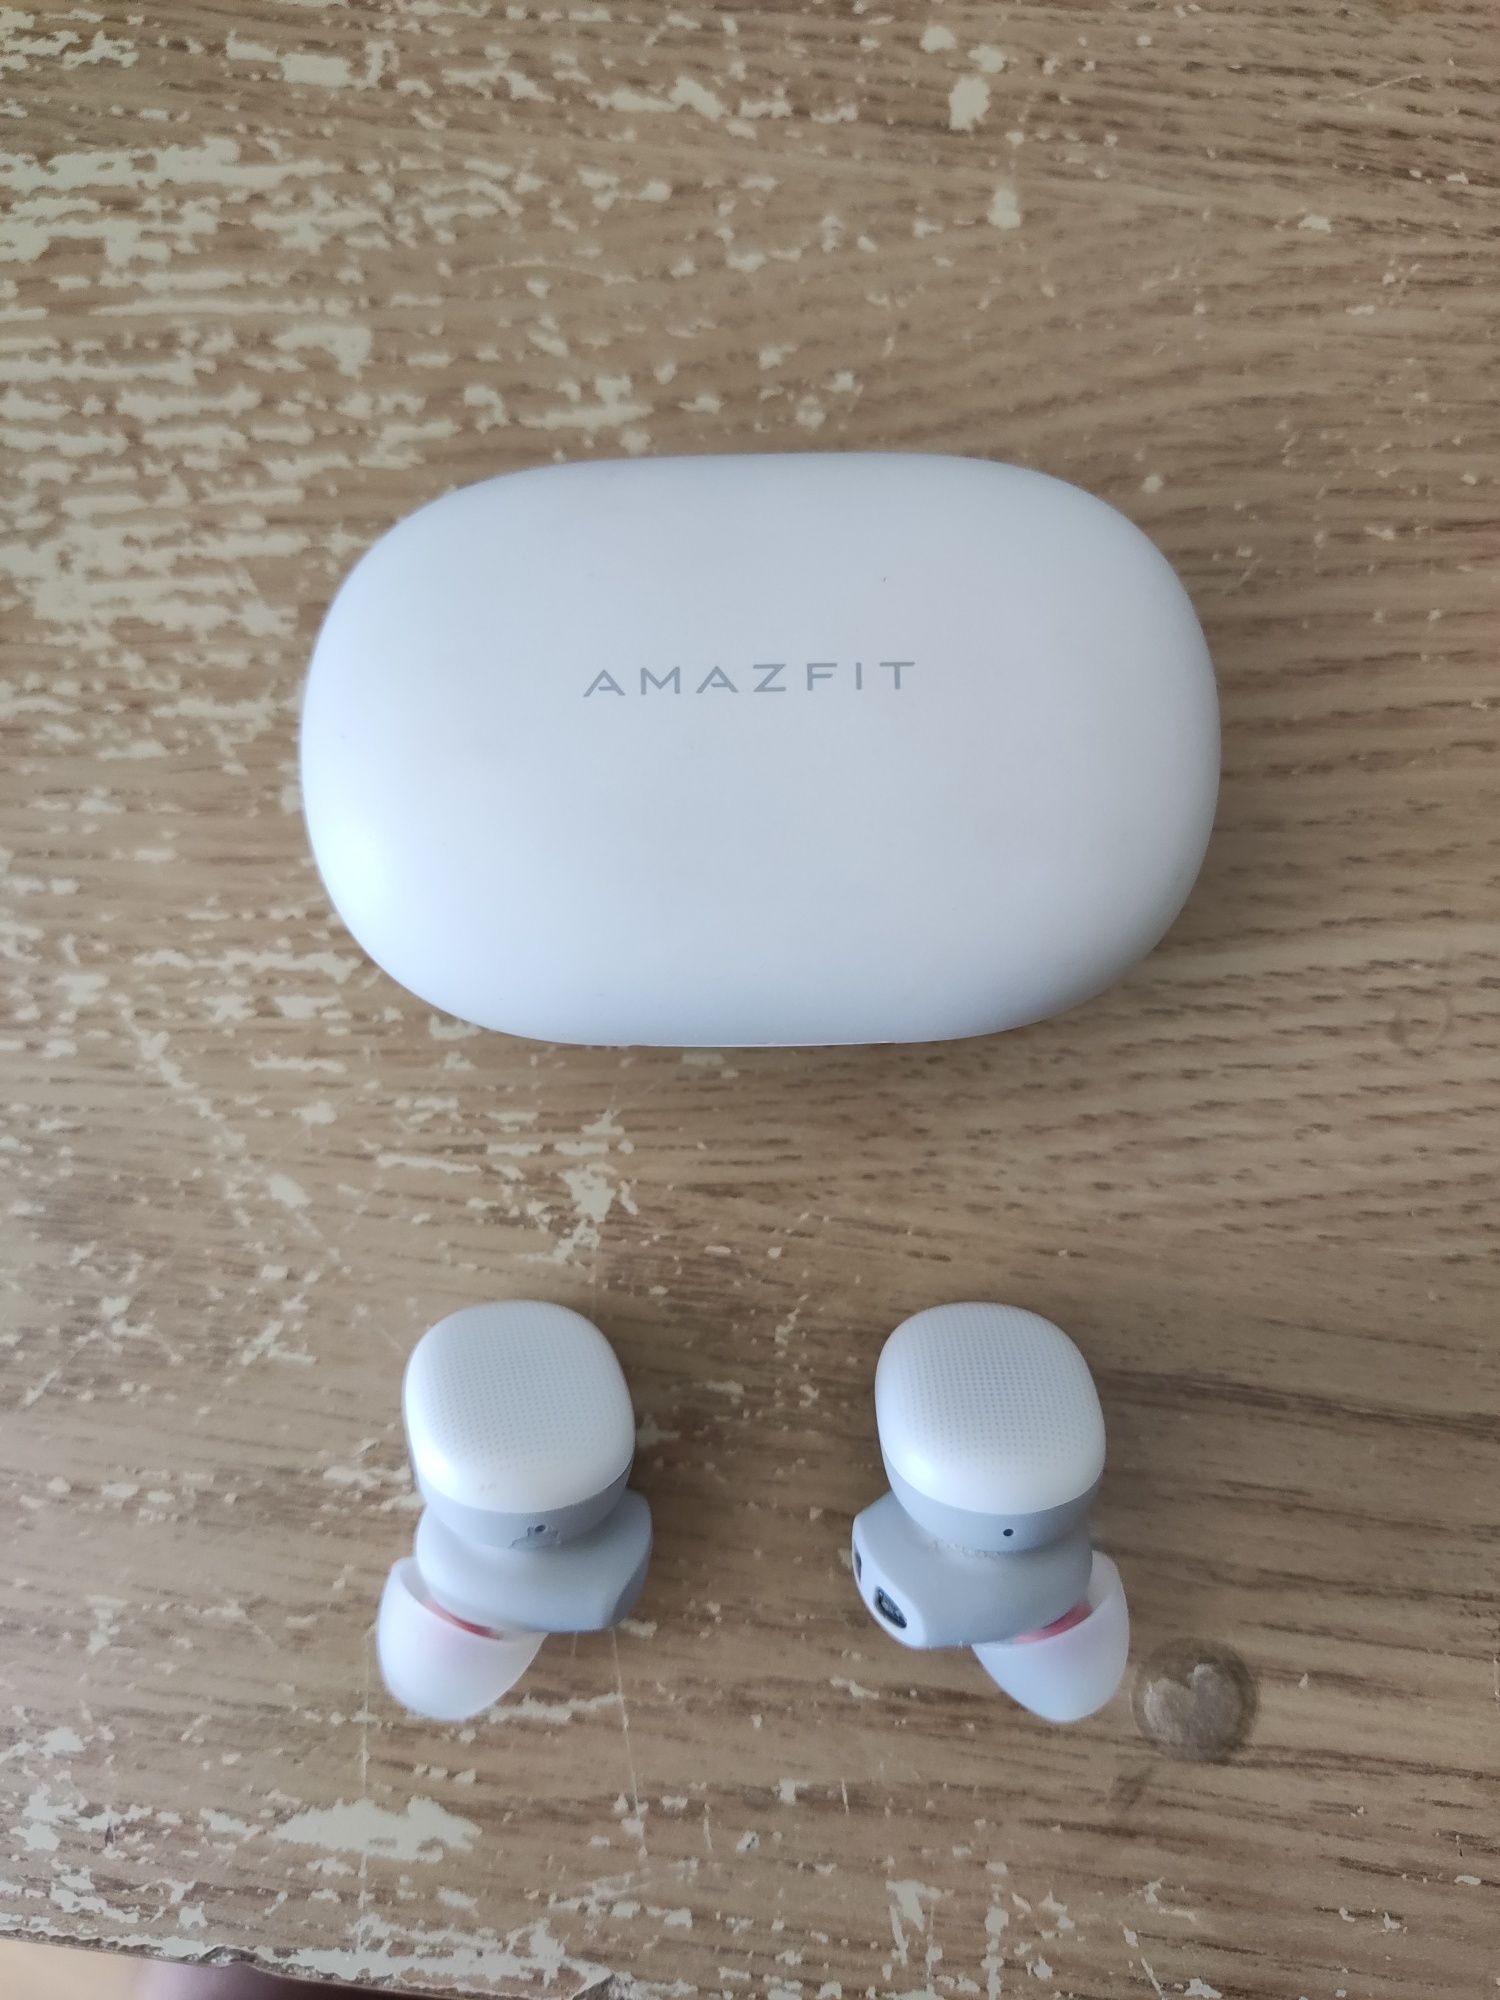 Amazfit Powerbuds Earbuds